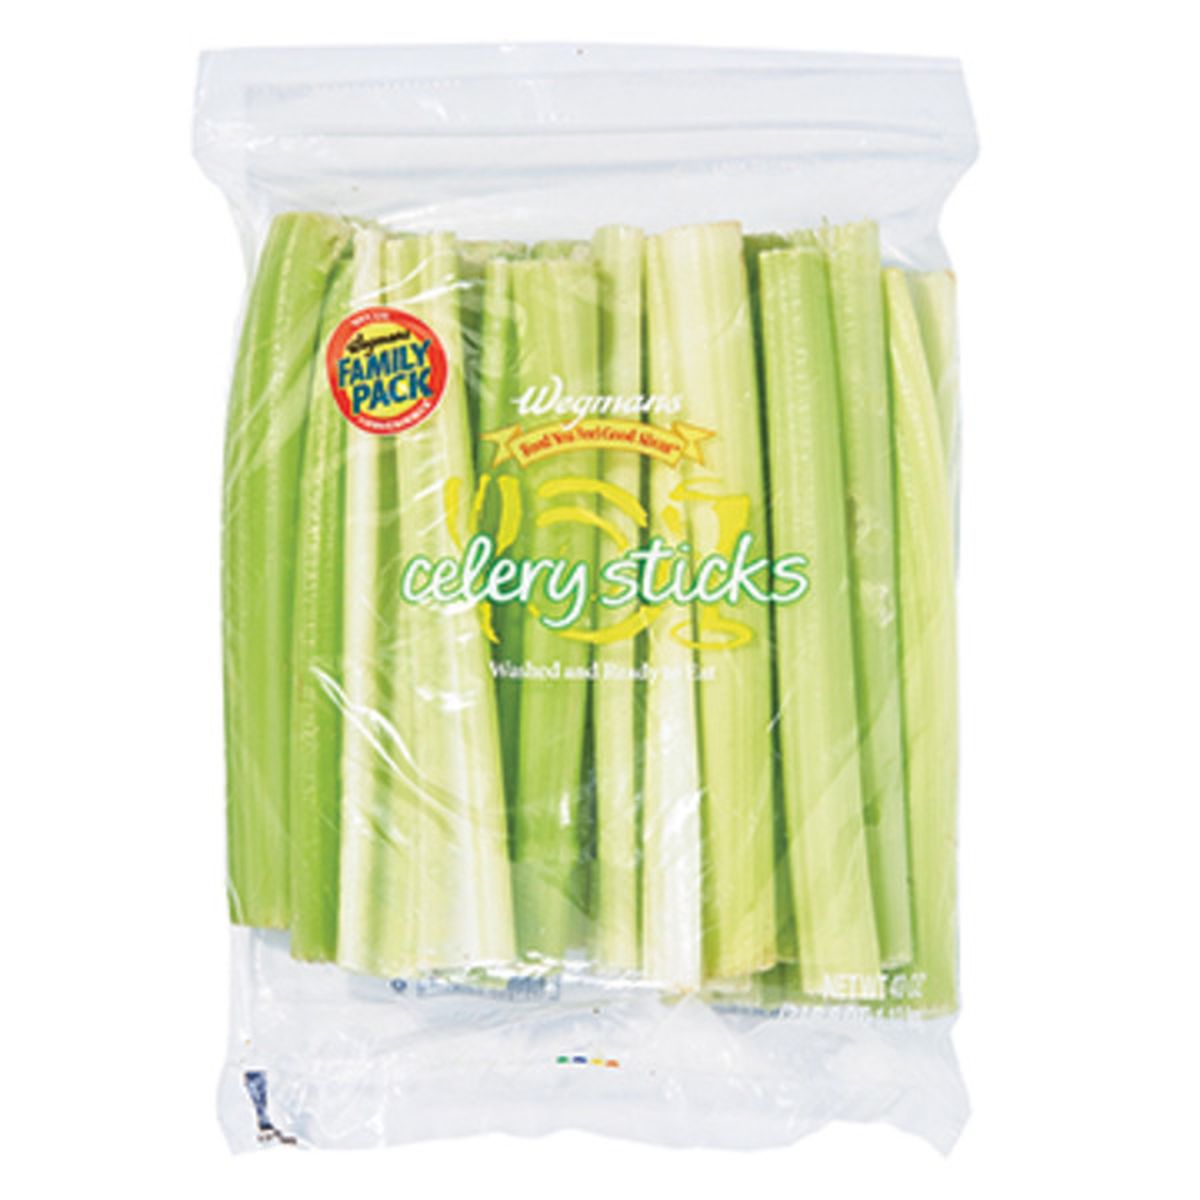 Calories in Wegmans Celery Sticks, FAMILY PACK